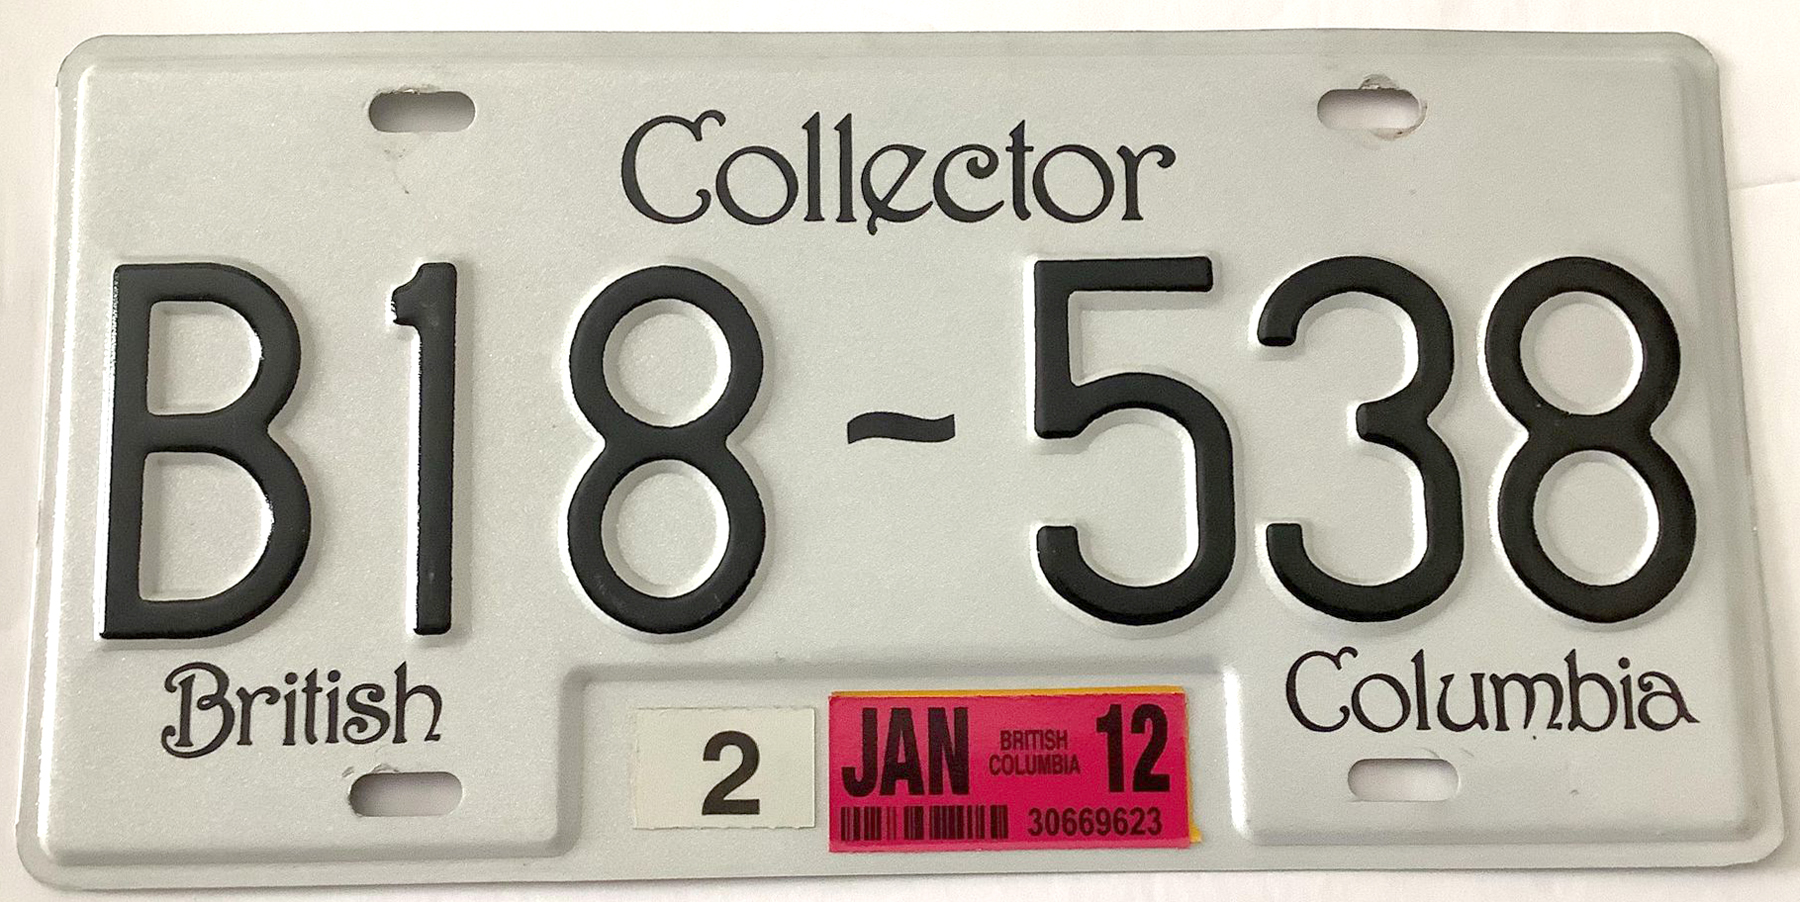 British Columbia Collector License Plates